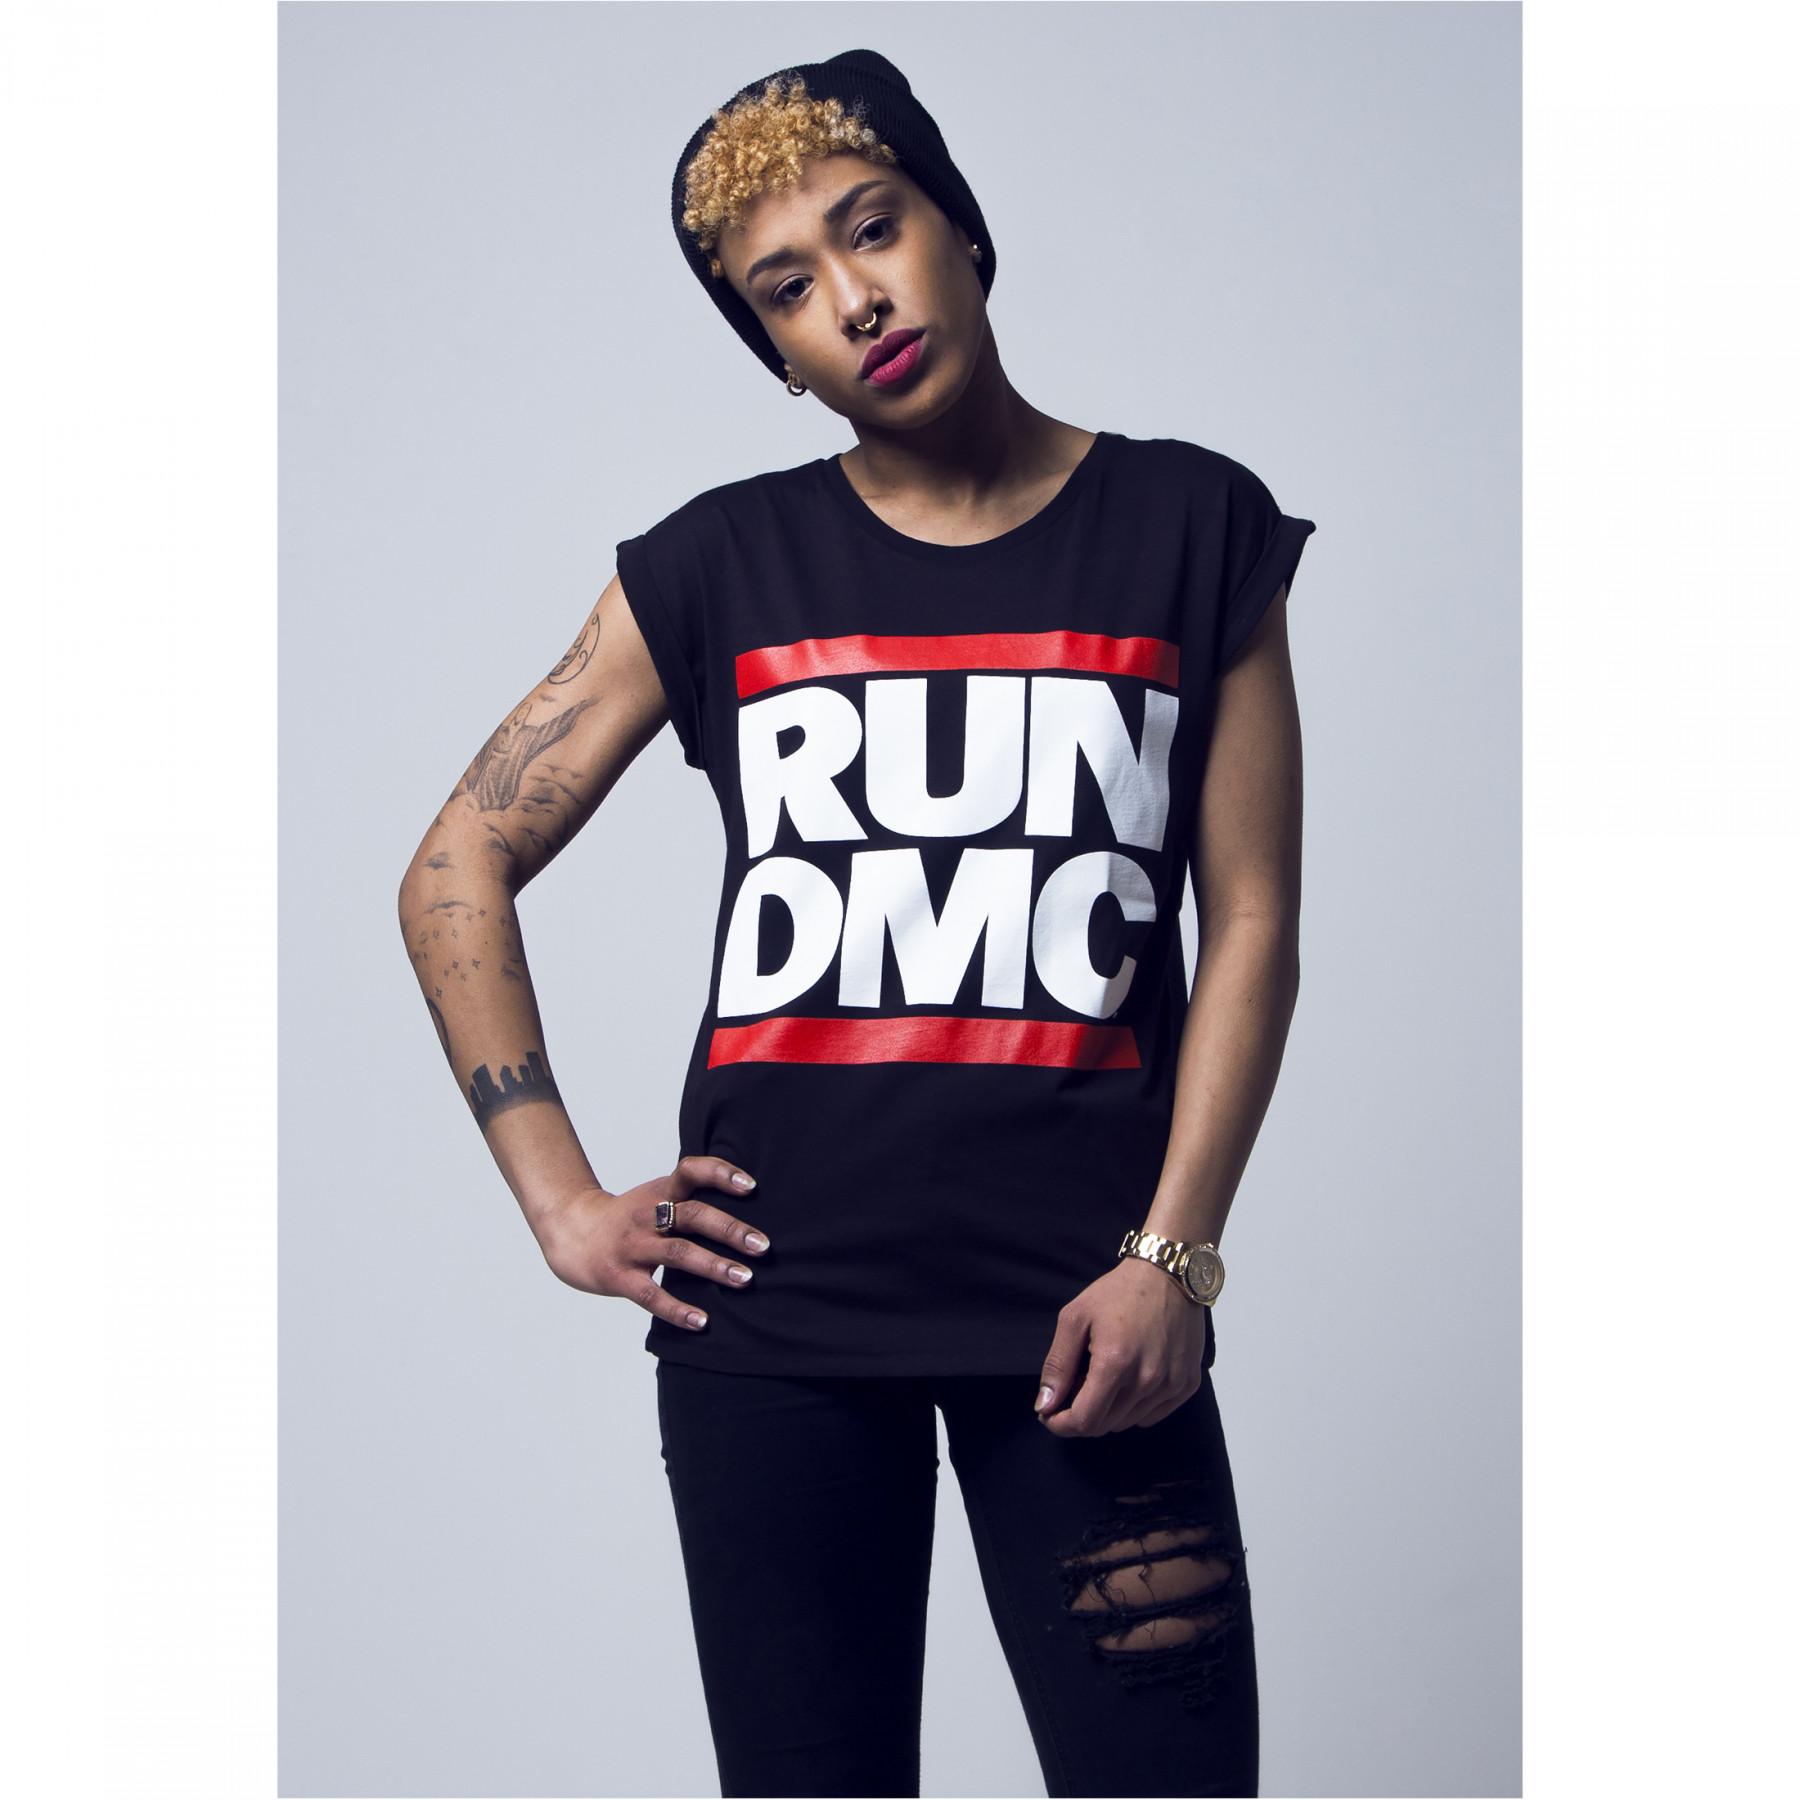 Dames-T-shirt Mister Tee run dmc logo